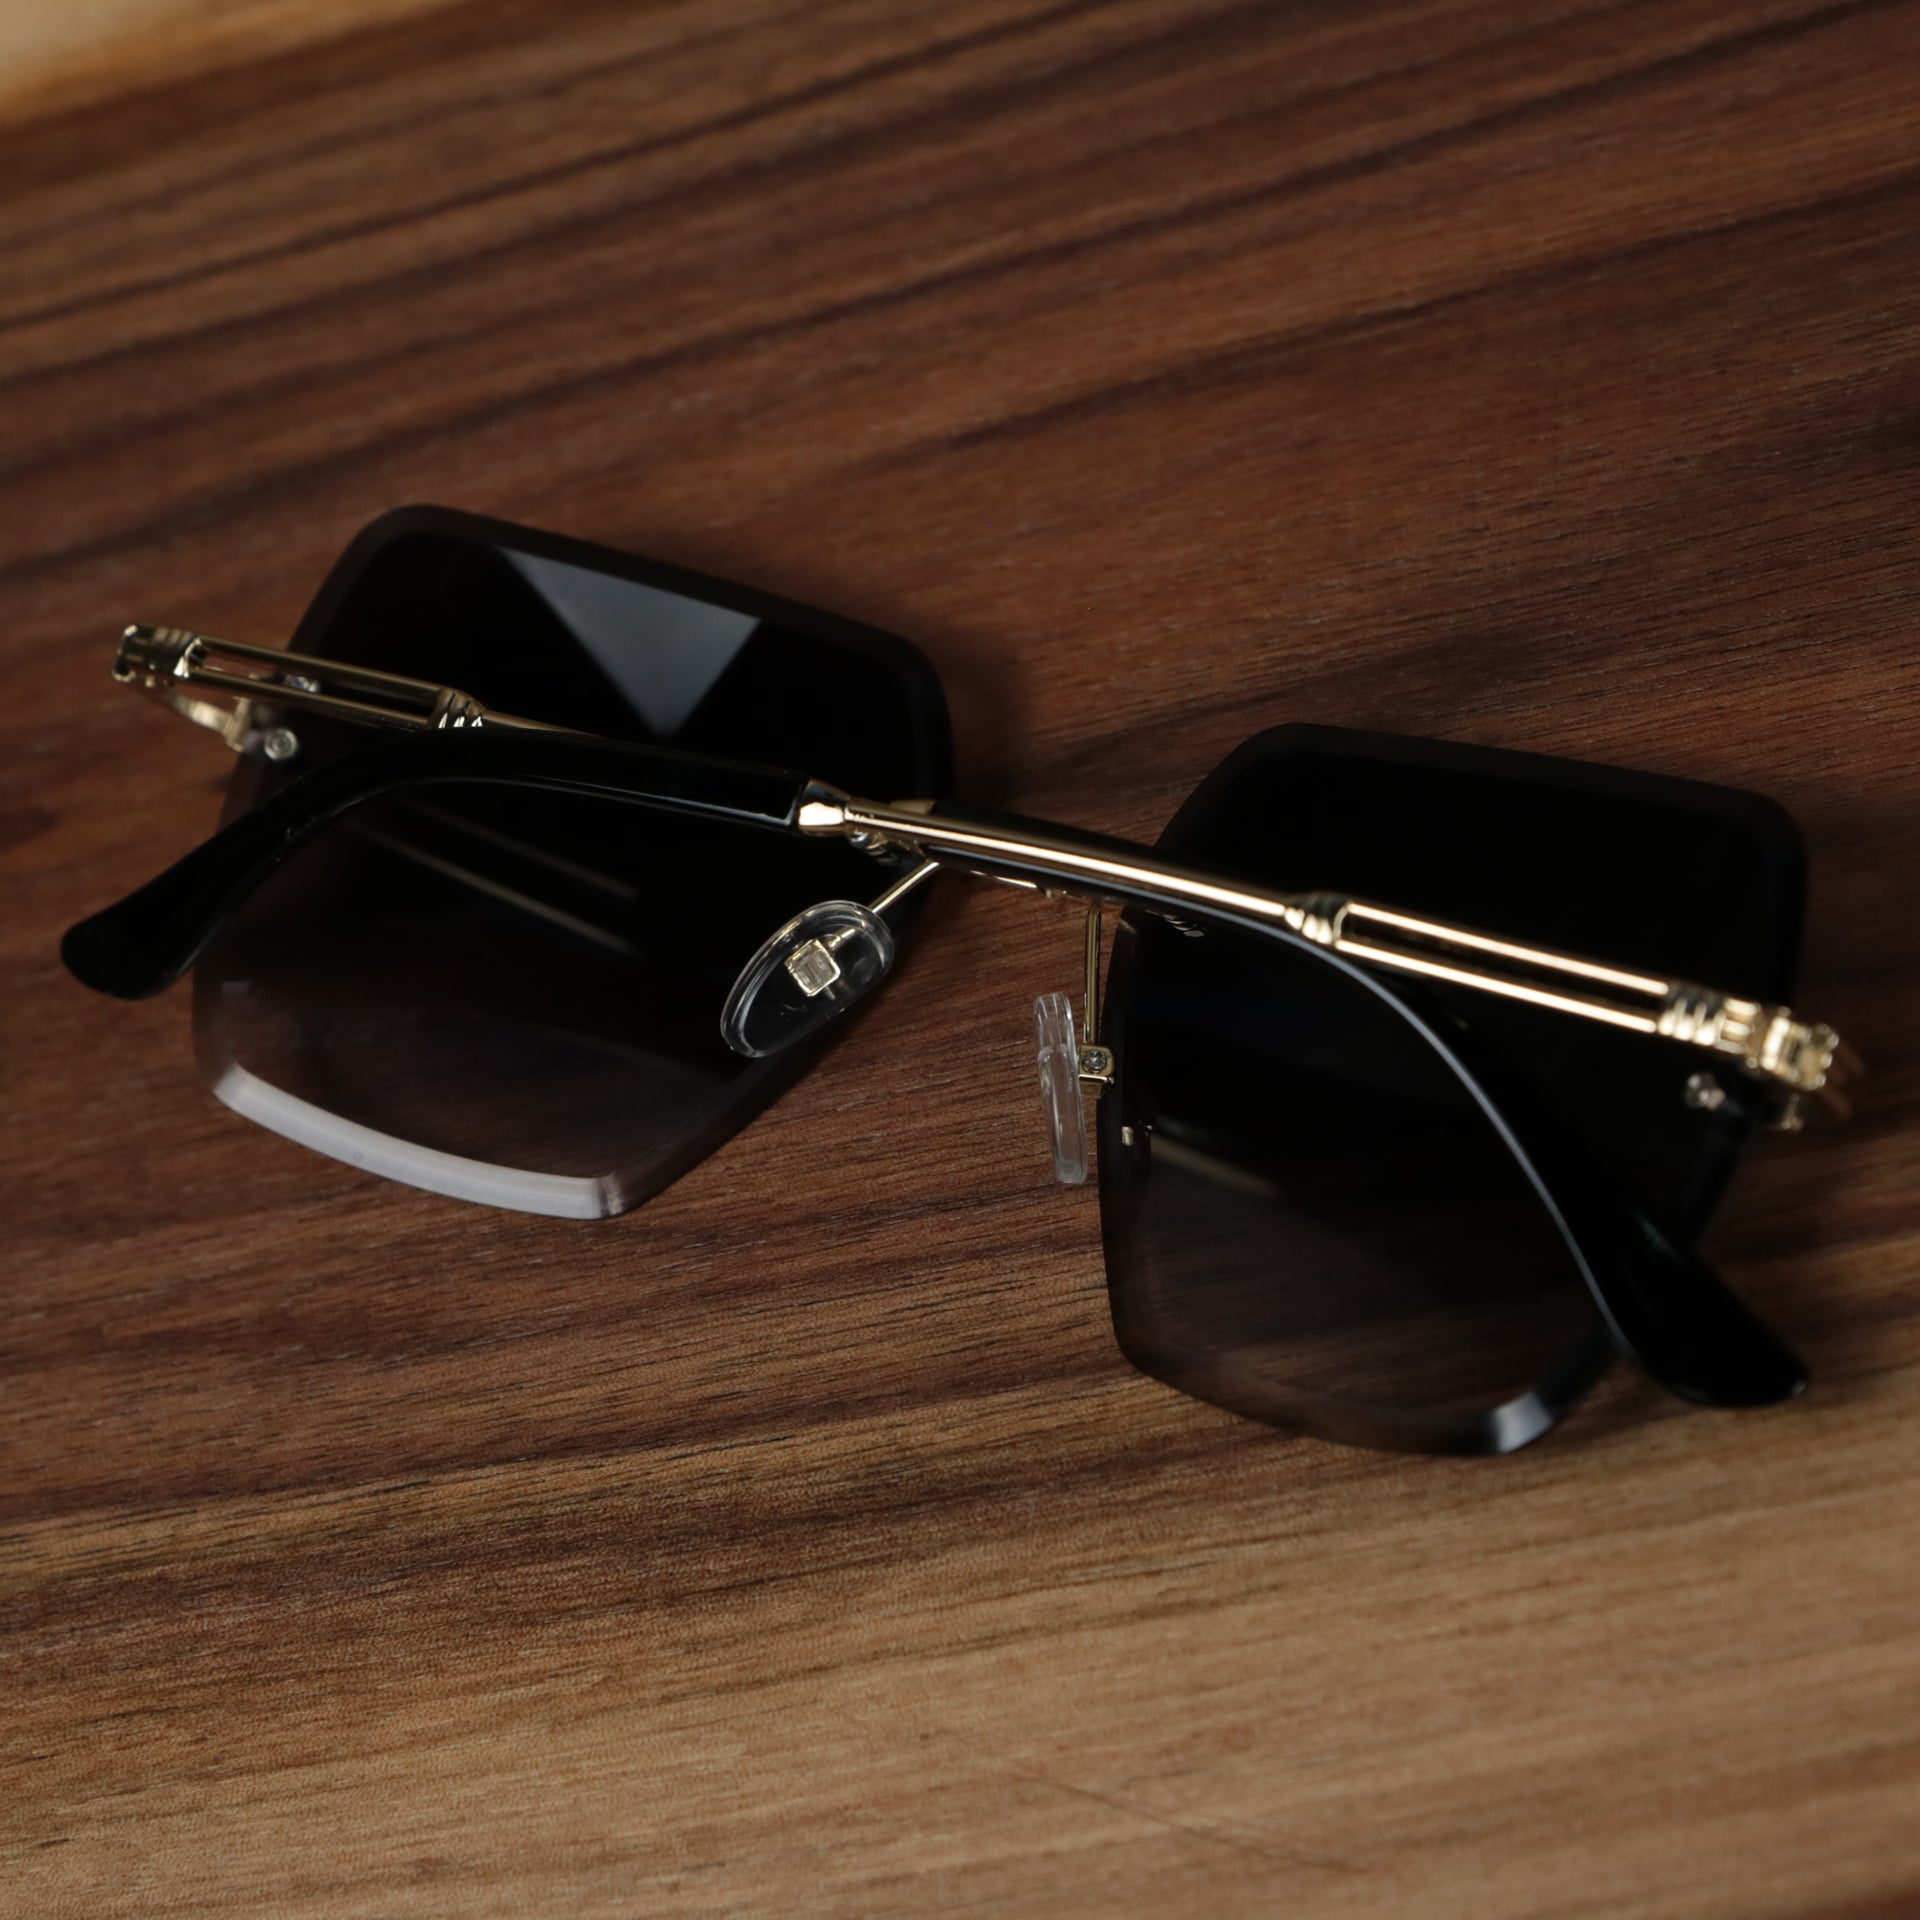 The Large Lightweight Frame Black Lens Sunglasses with Gold Frame folded up